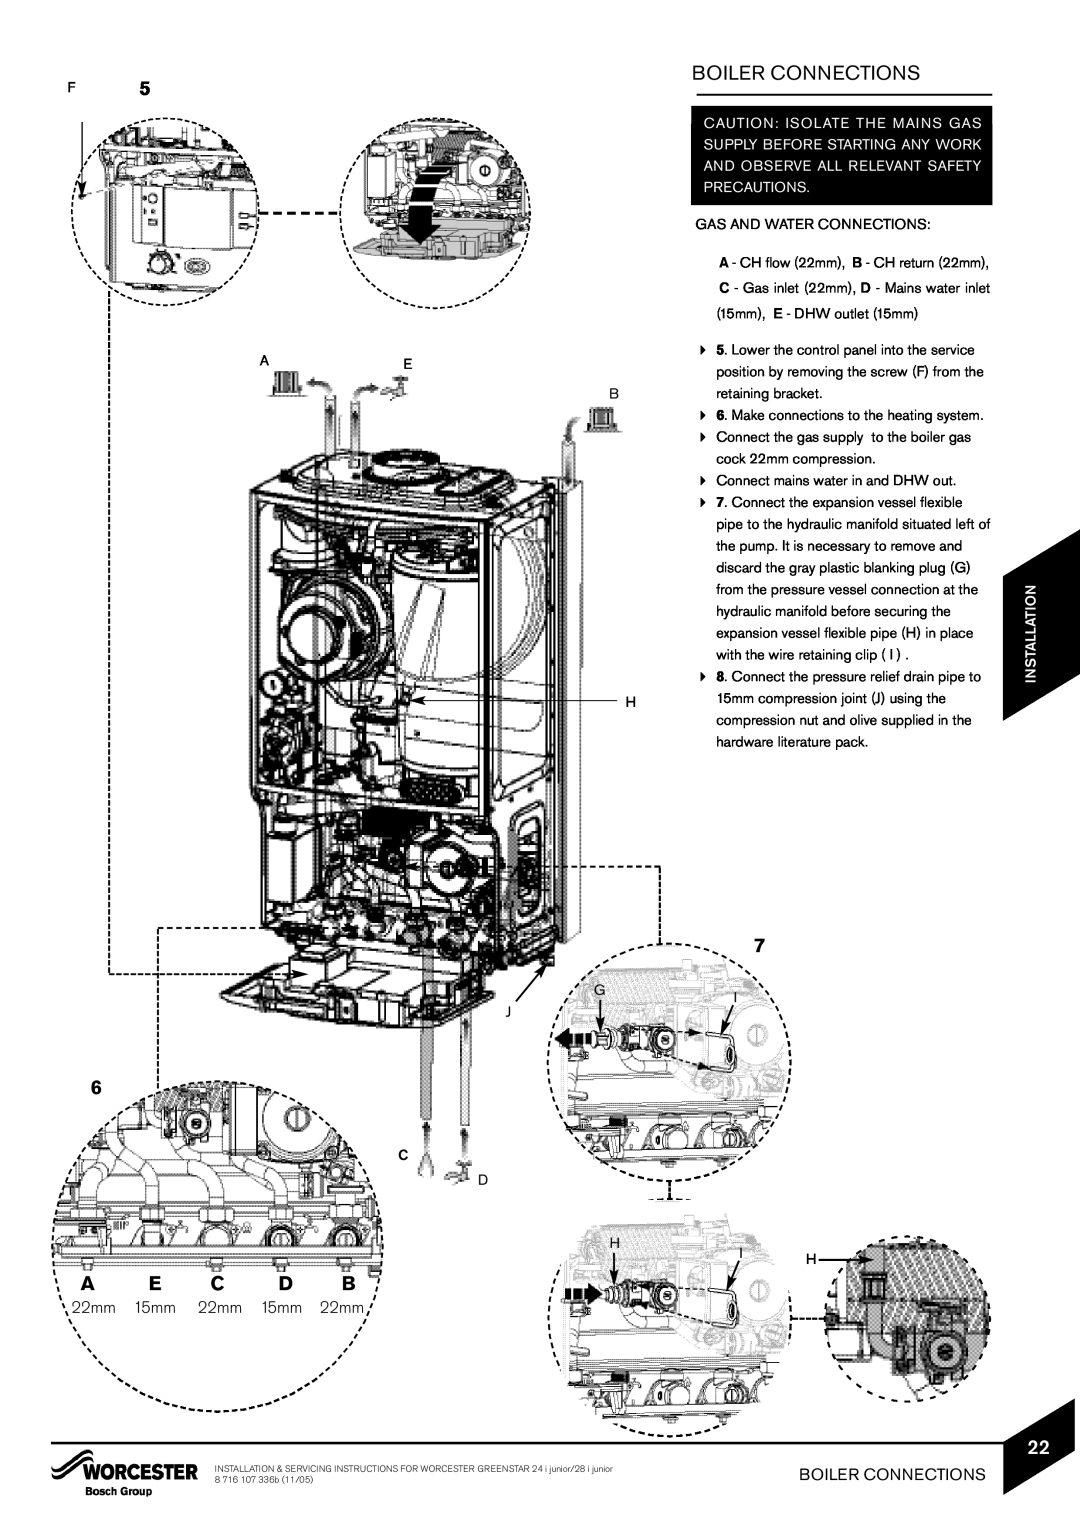 Bosch Appliances 24i junior manual Boiler Connections, A E C D B, 22mm 15mm 22mm 15mm 22mm, Caution Isolate Th E Mai Ns Gas 